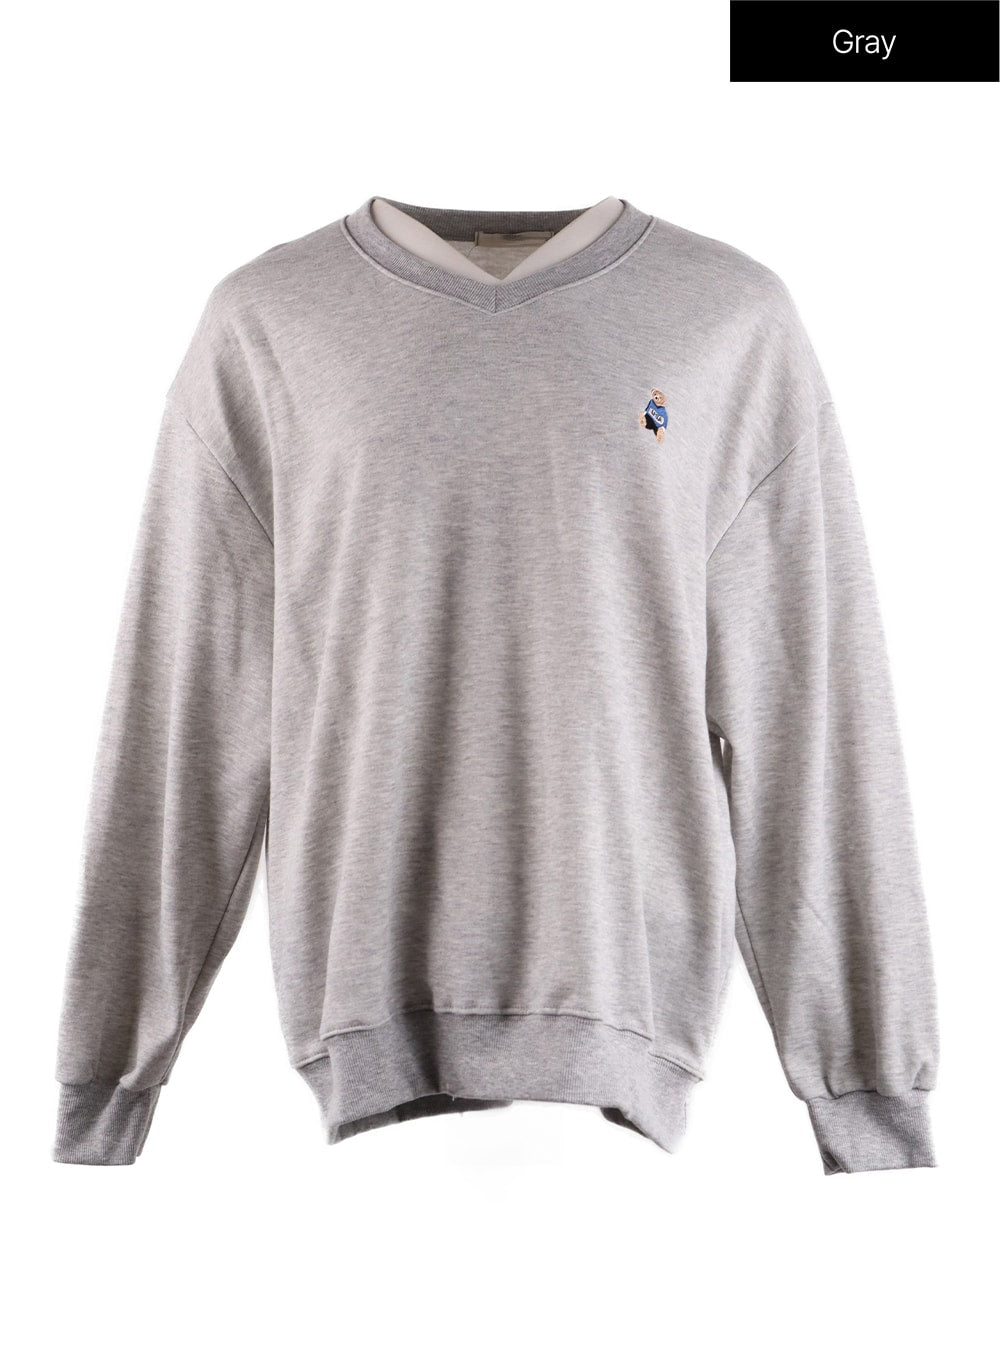 v-neck-teddy-bear-sweatshirt-if408 / Gray